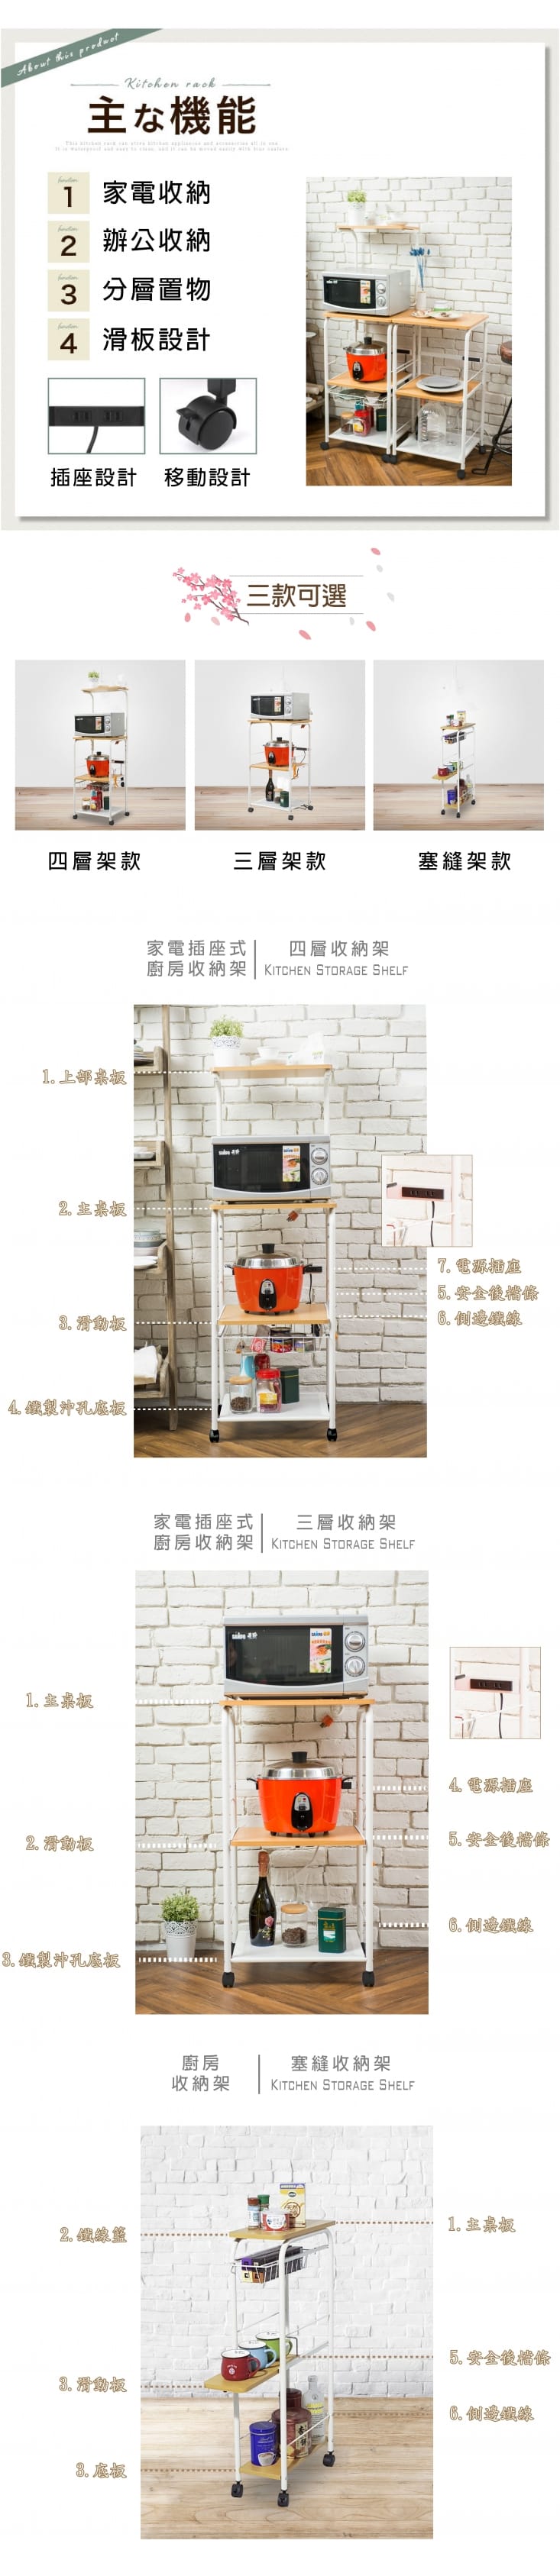 【Home Storage】和風主義充電式廚房家電收納架